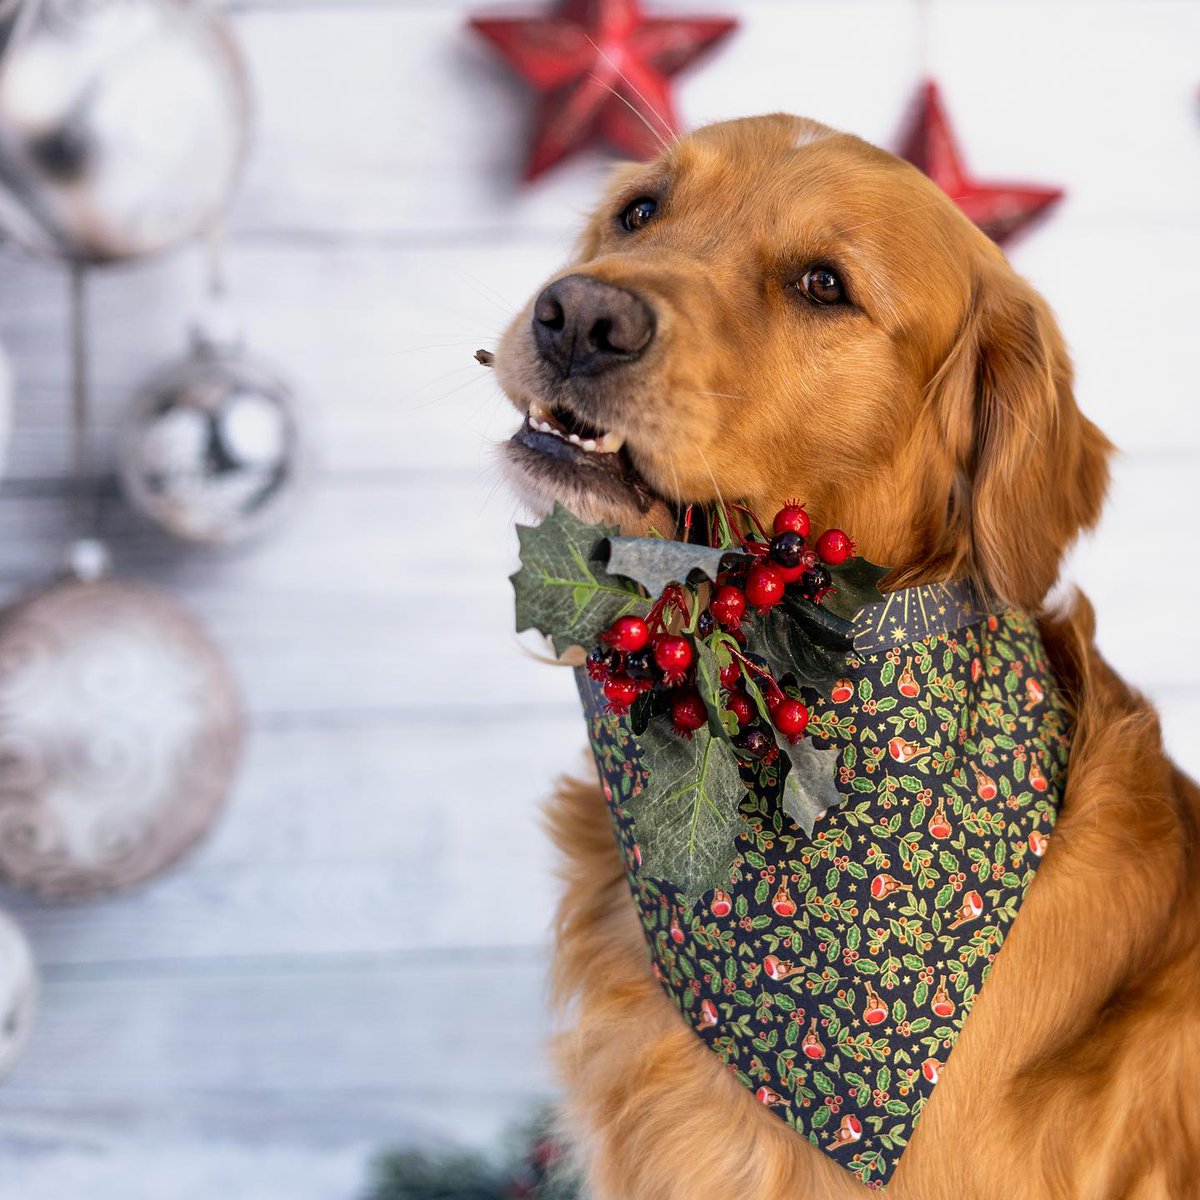 Happy almost Friday everyone 🎄 Who’s Feeling Christmassy?
-
#dogsoftwitter #dogs #goldenretriver #ilovegoldens #ilovegolden_retrievers